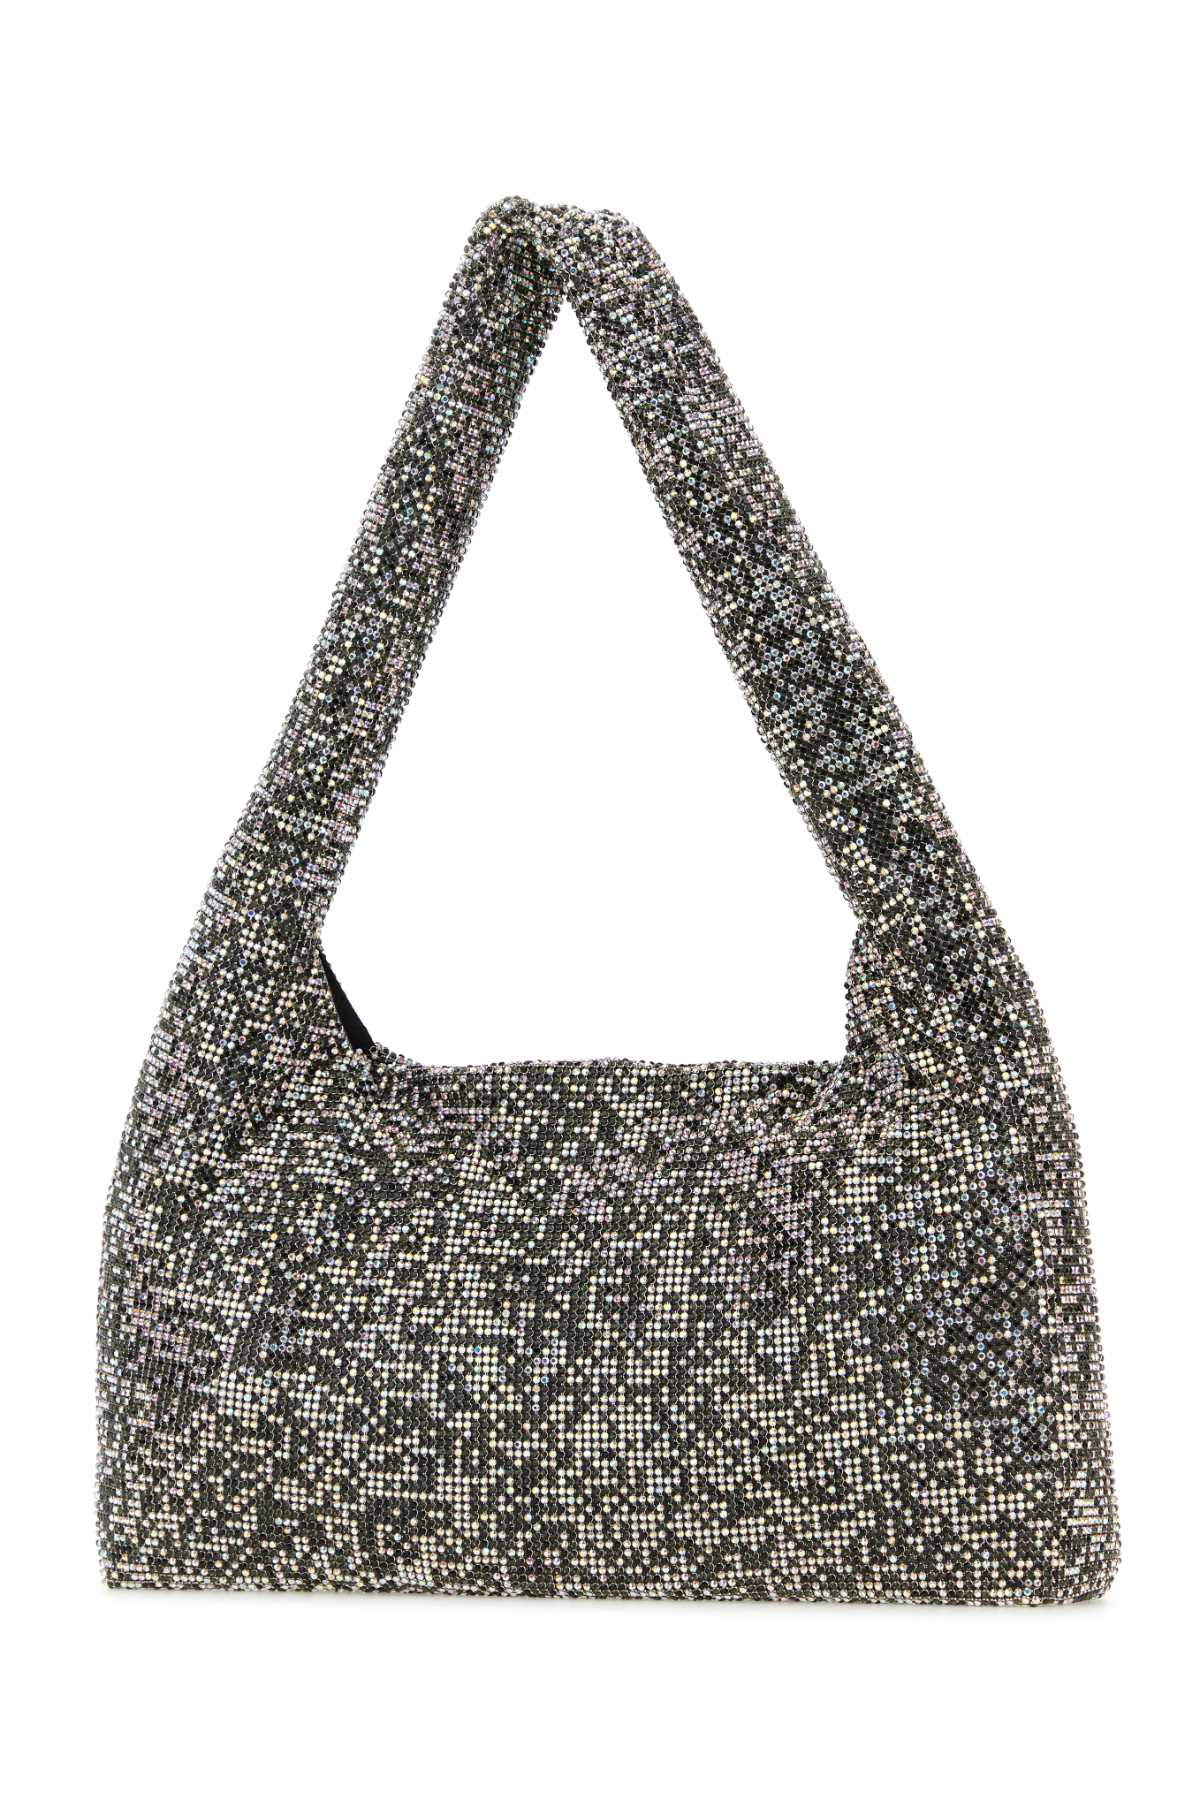 Shop Kara Black Rhinestones Handbag In Blackpixel